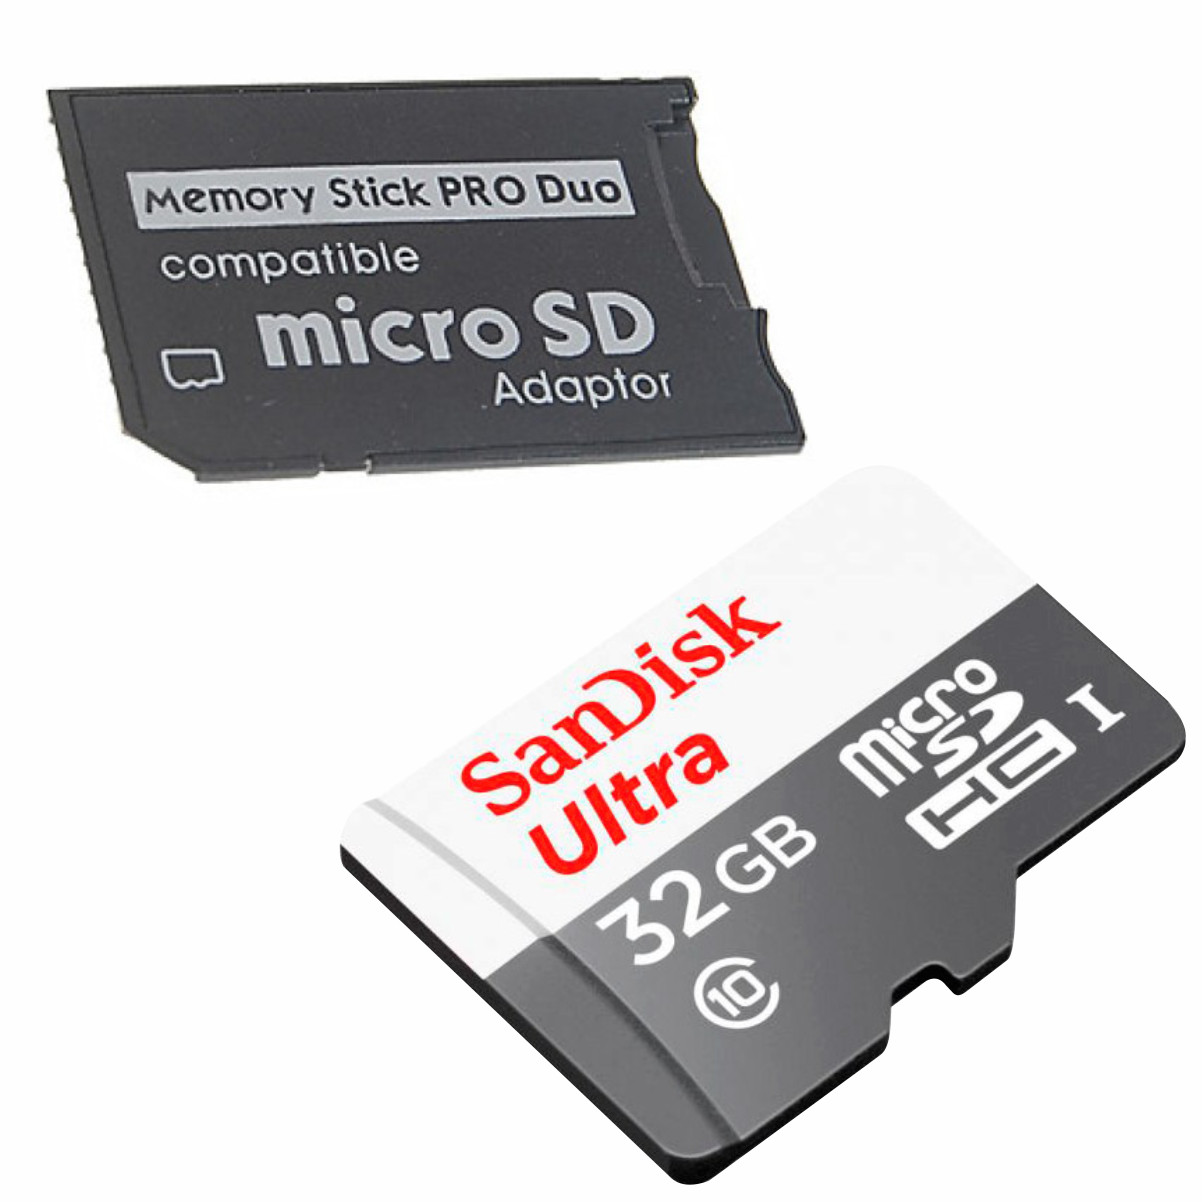 KIT MicroSDHC SanDisk Ultra 32gb + Adaptador Microsd Microsdhc P/ Memorystick Pro Duo